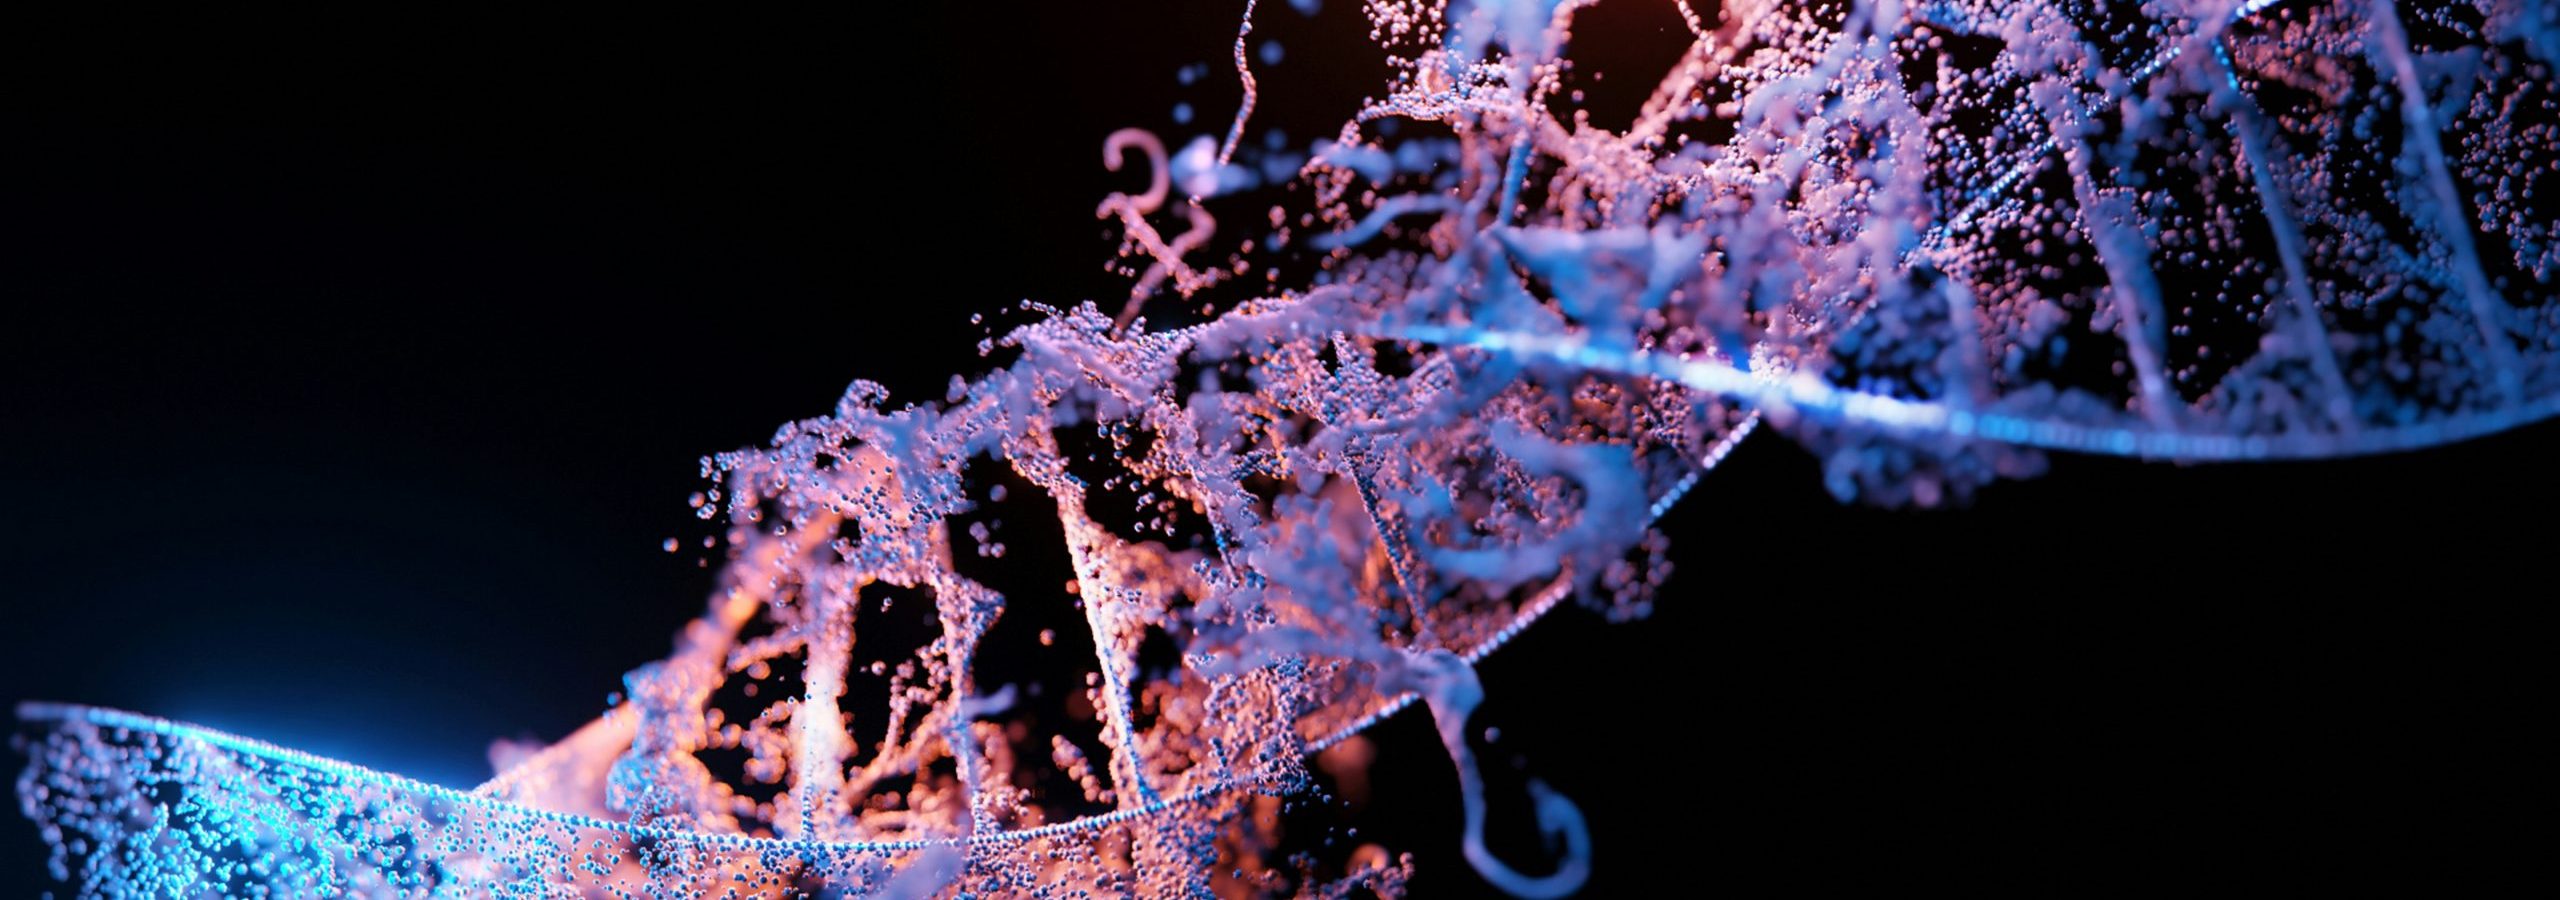 Photo render of DNA strand